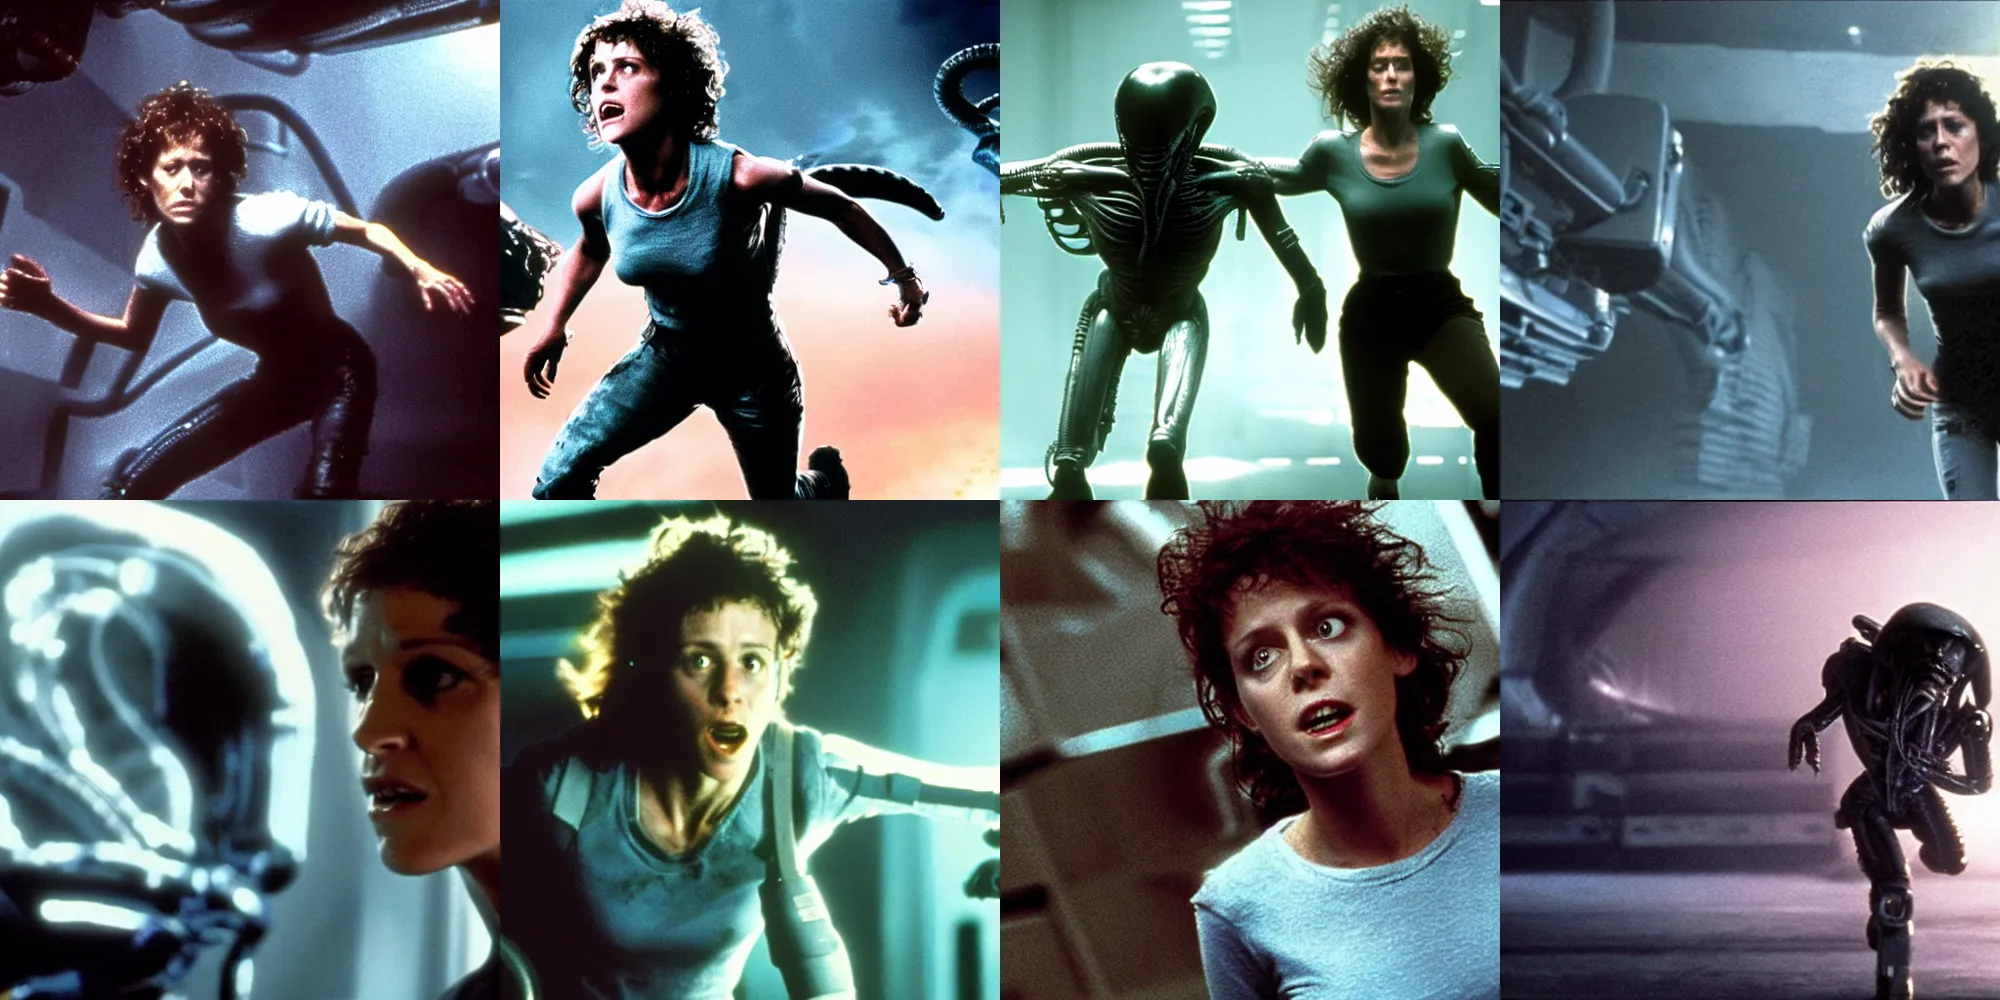 Prompt: Ellen Ripley from Alien running away from a xenomorph, 4k film still, extremely detailed